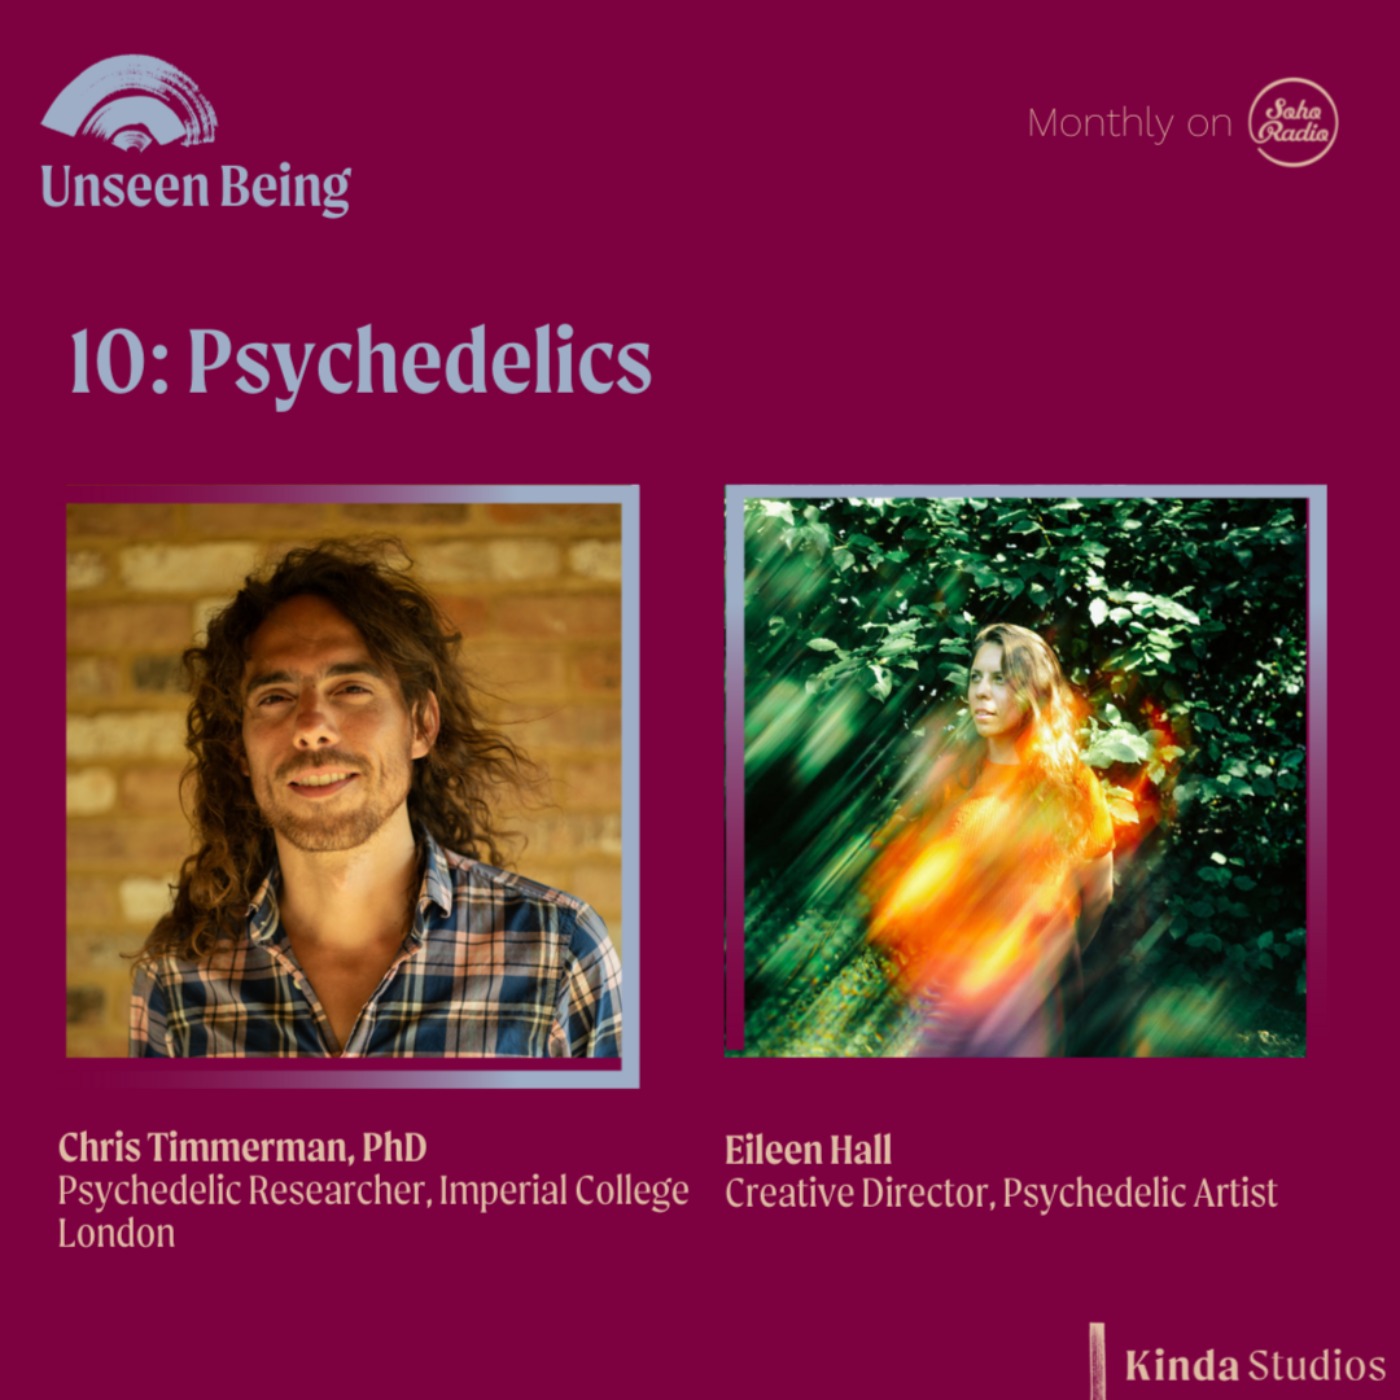 10. Psychedelics